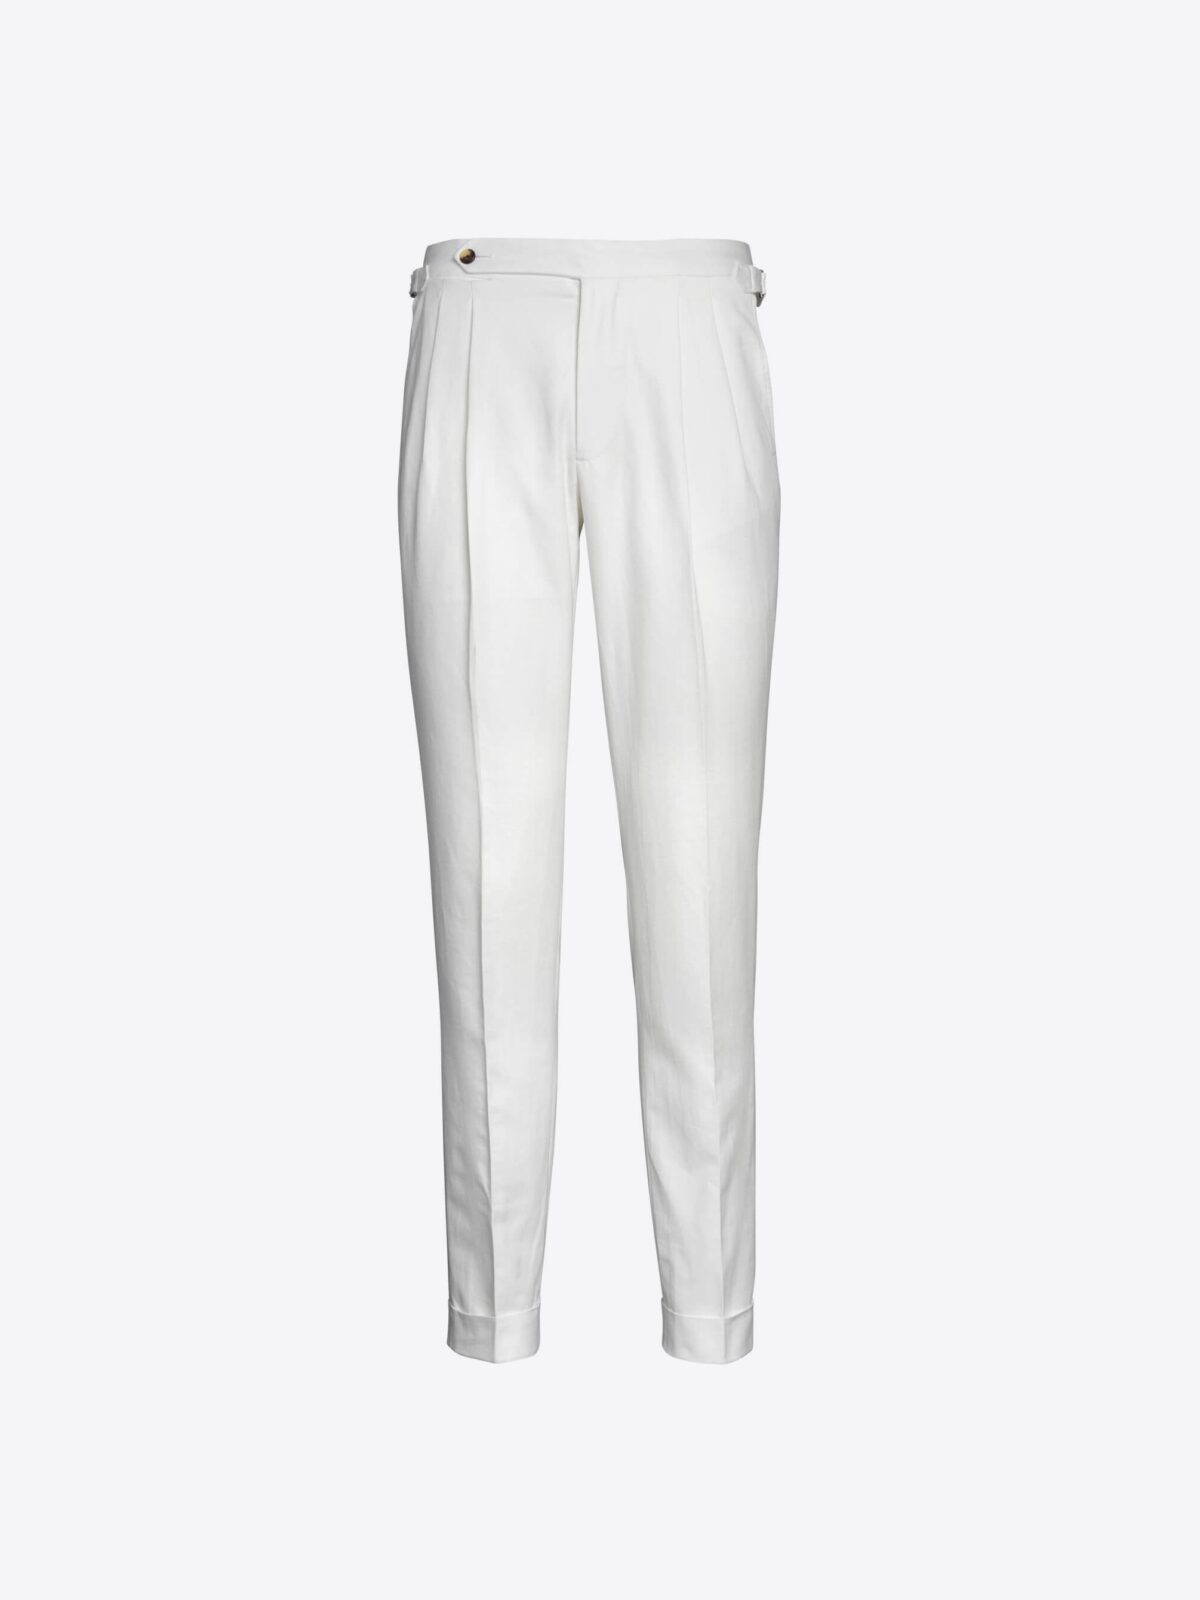 White pants trousers | Max Mara-anthinhphatland.vn